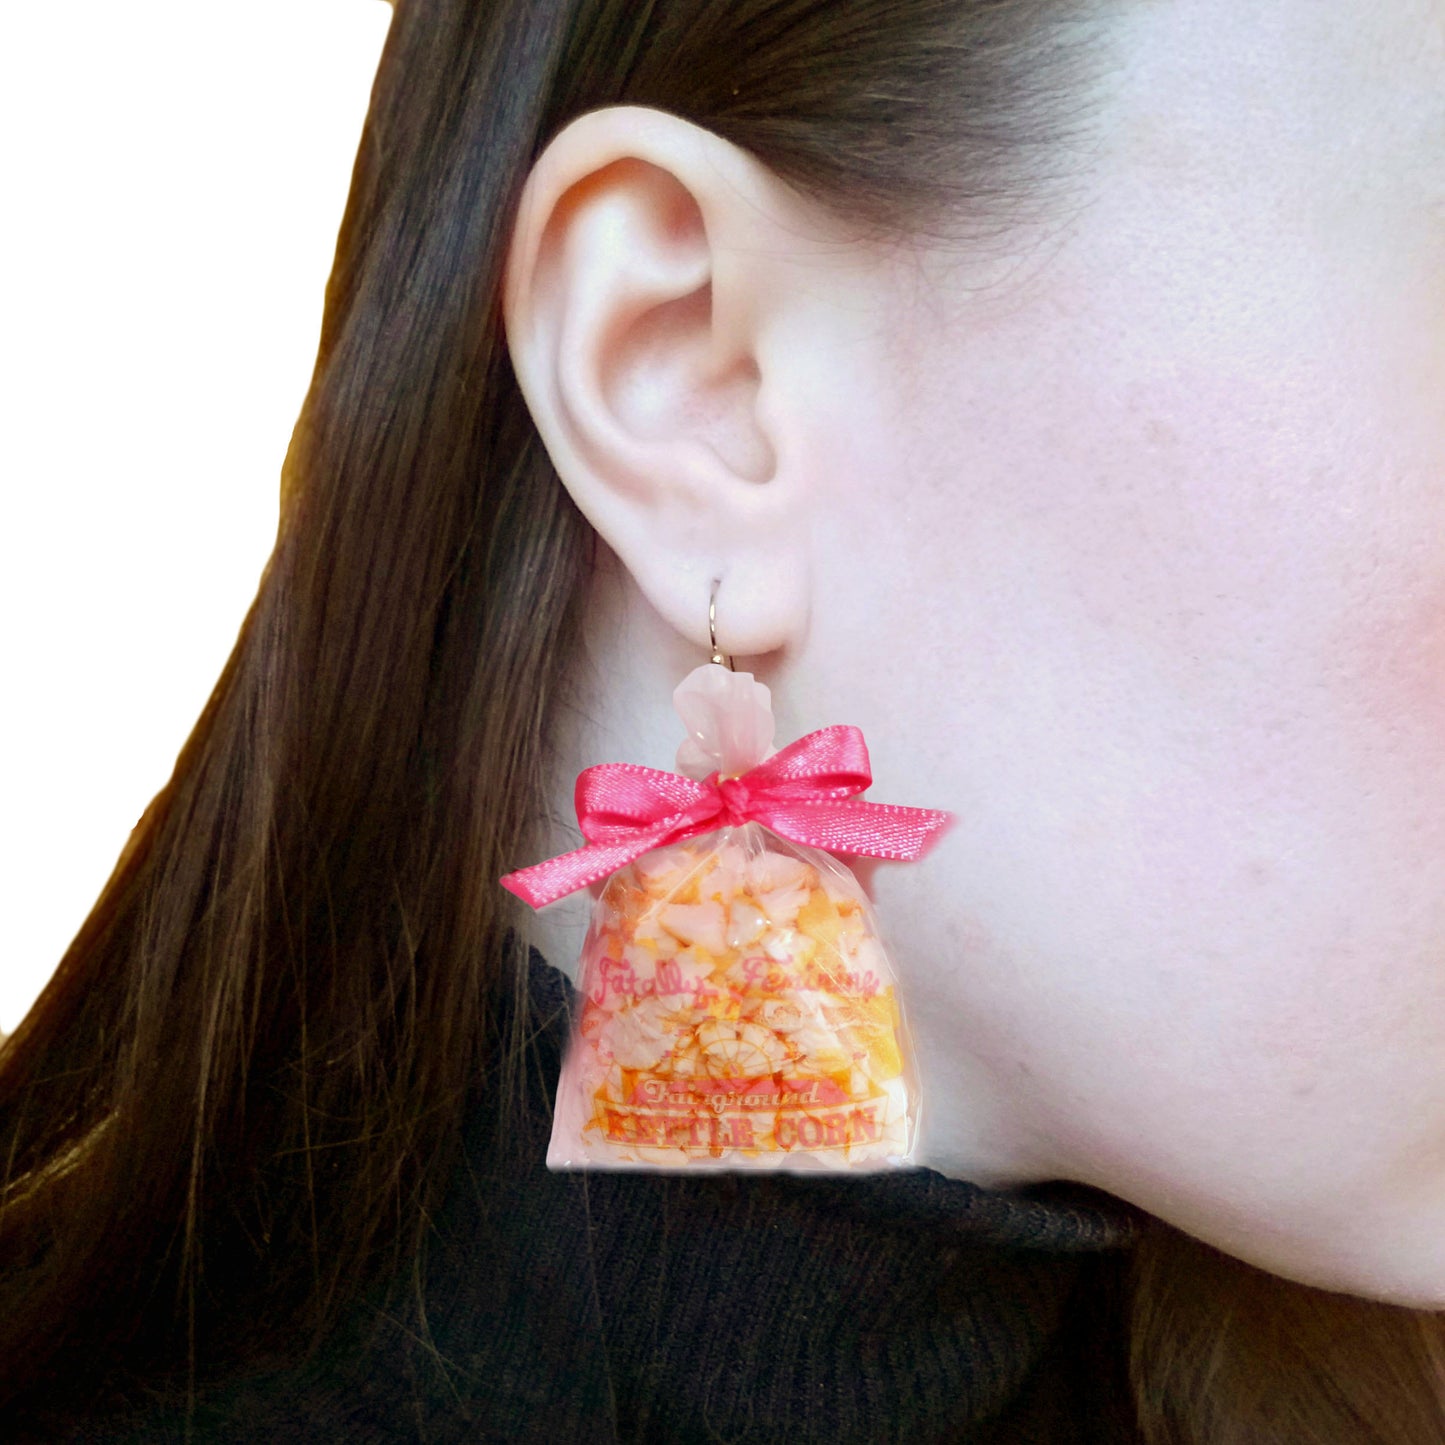 Popcorn Kettle Corn Bag Earrings - Hypoallergenic  - Fatally Feminine Designs